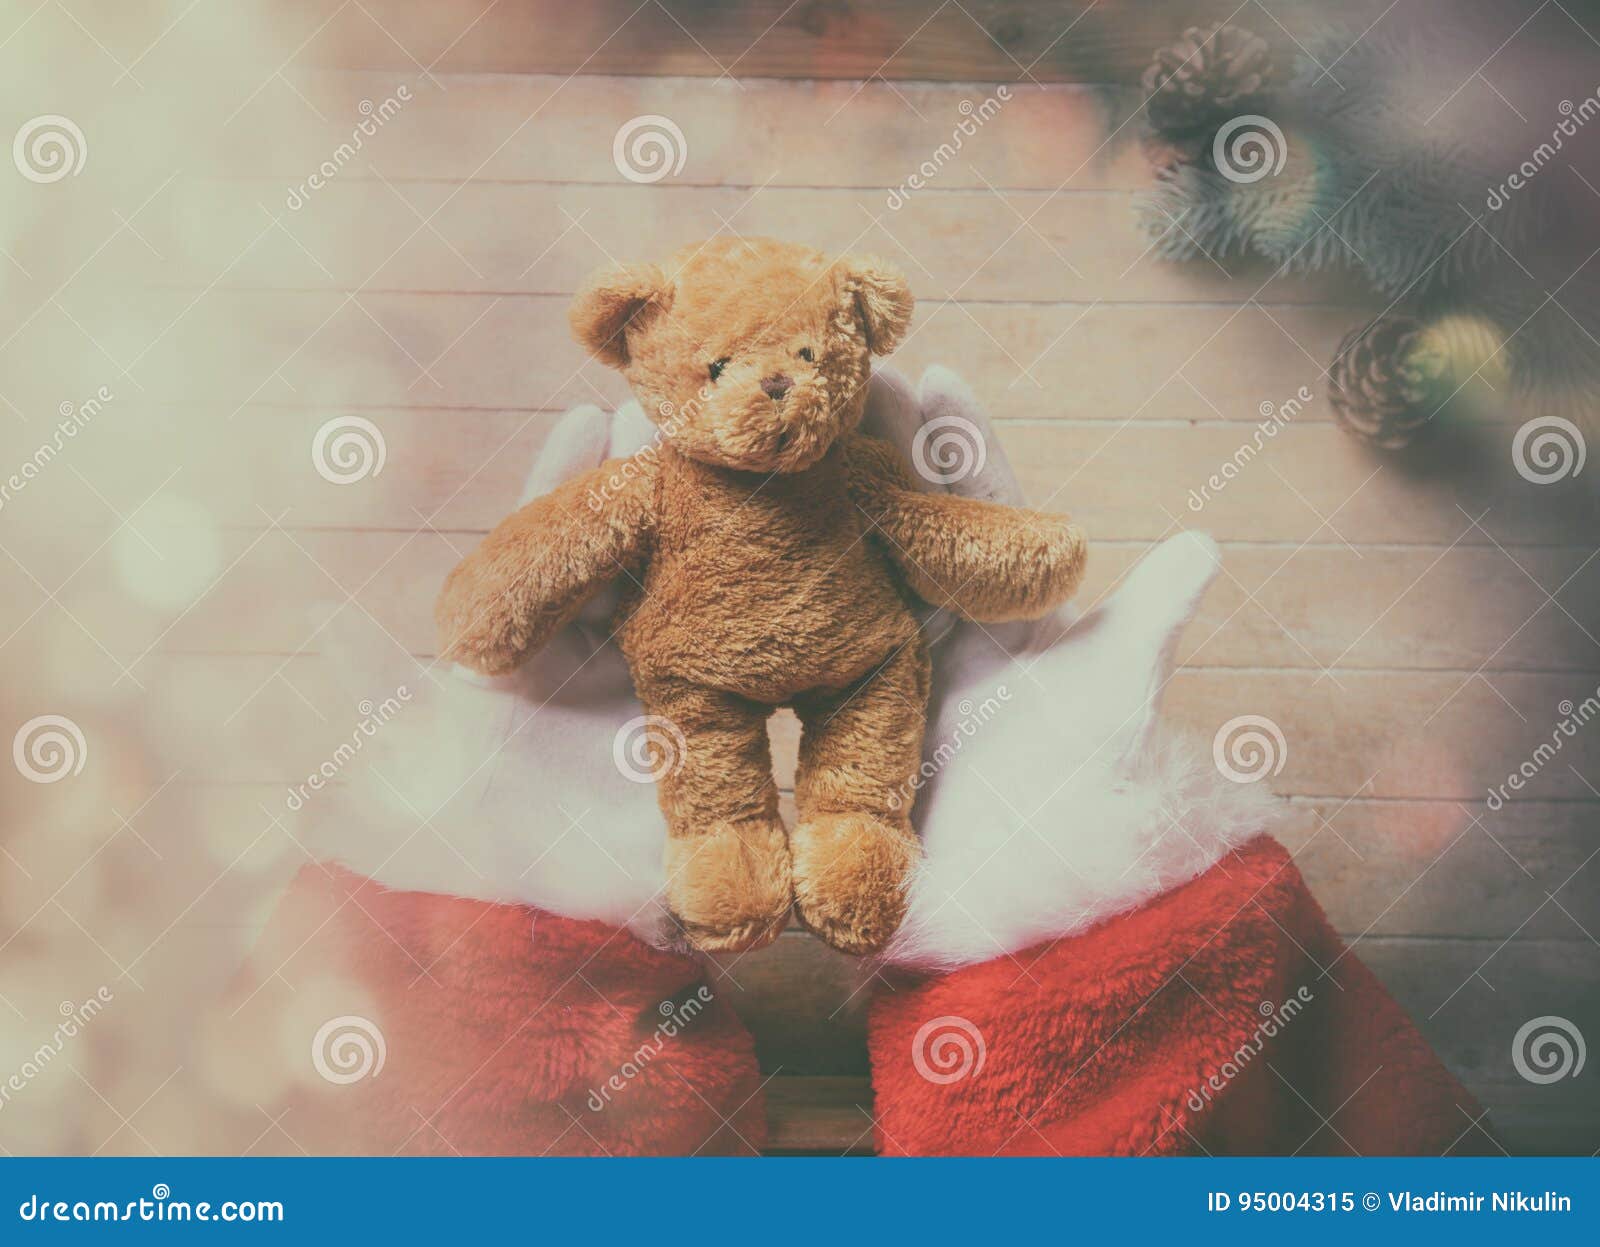 Santa Claus Holding Teddy Bear Toy Stock Image - Image of background ...